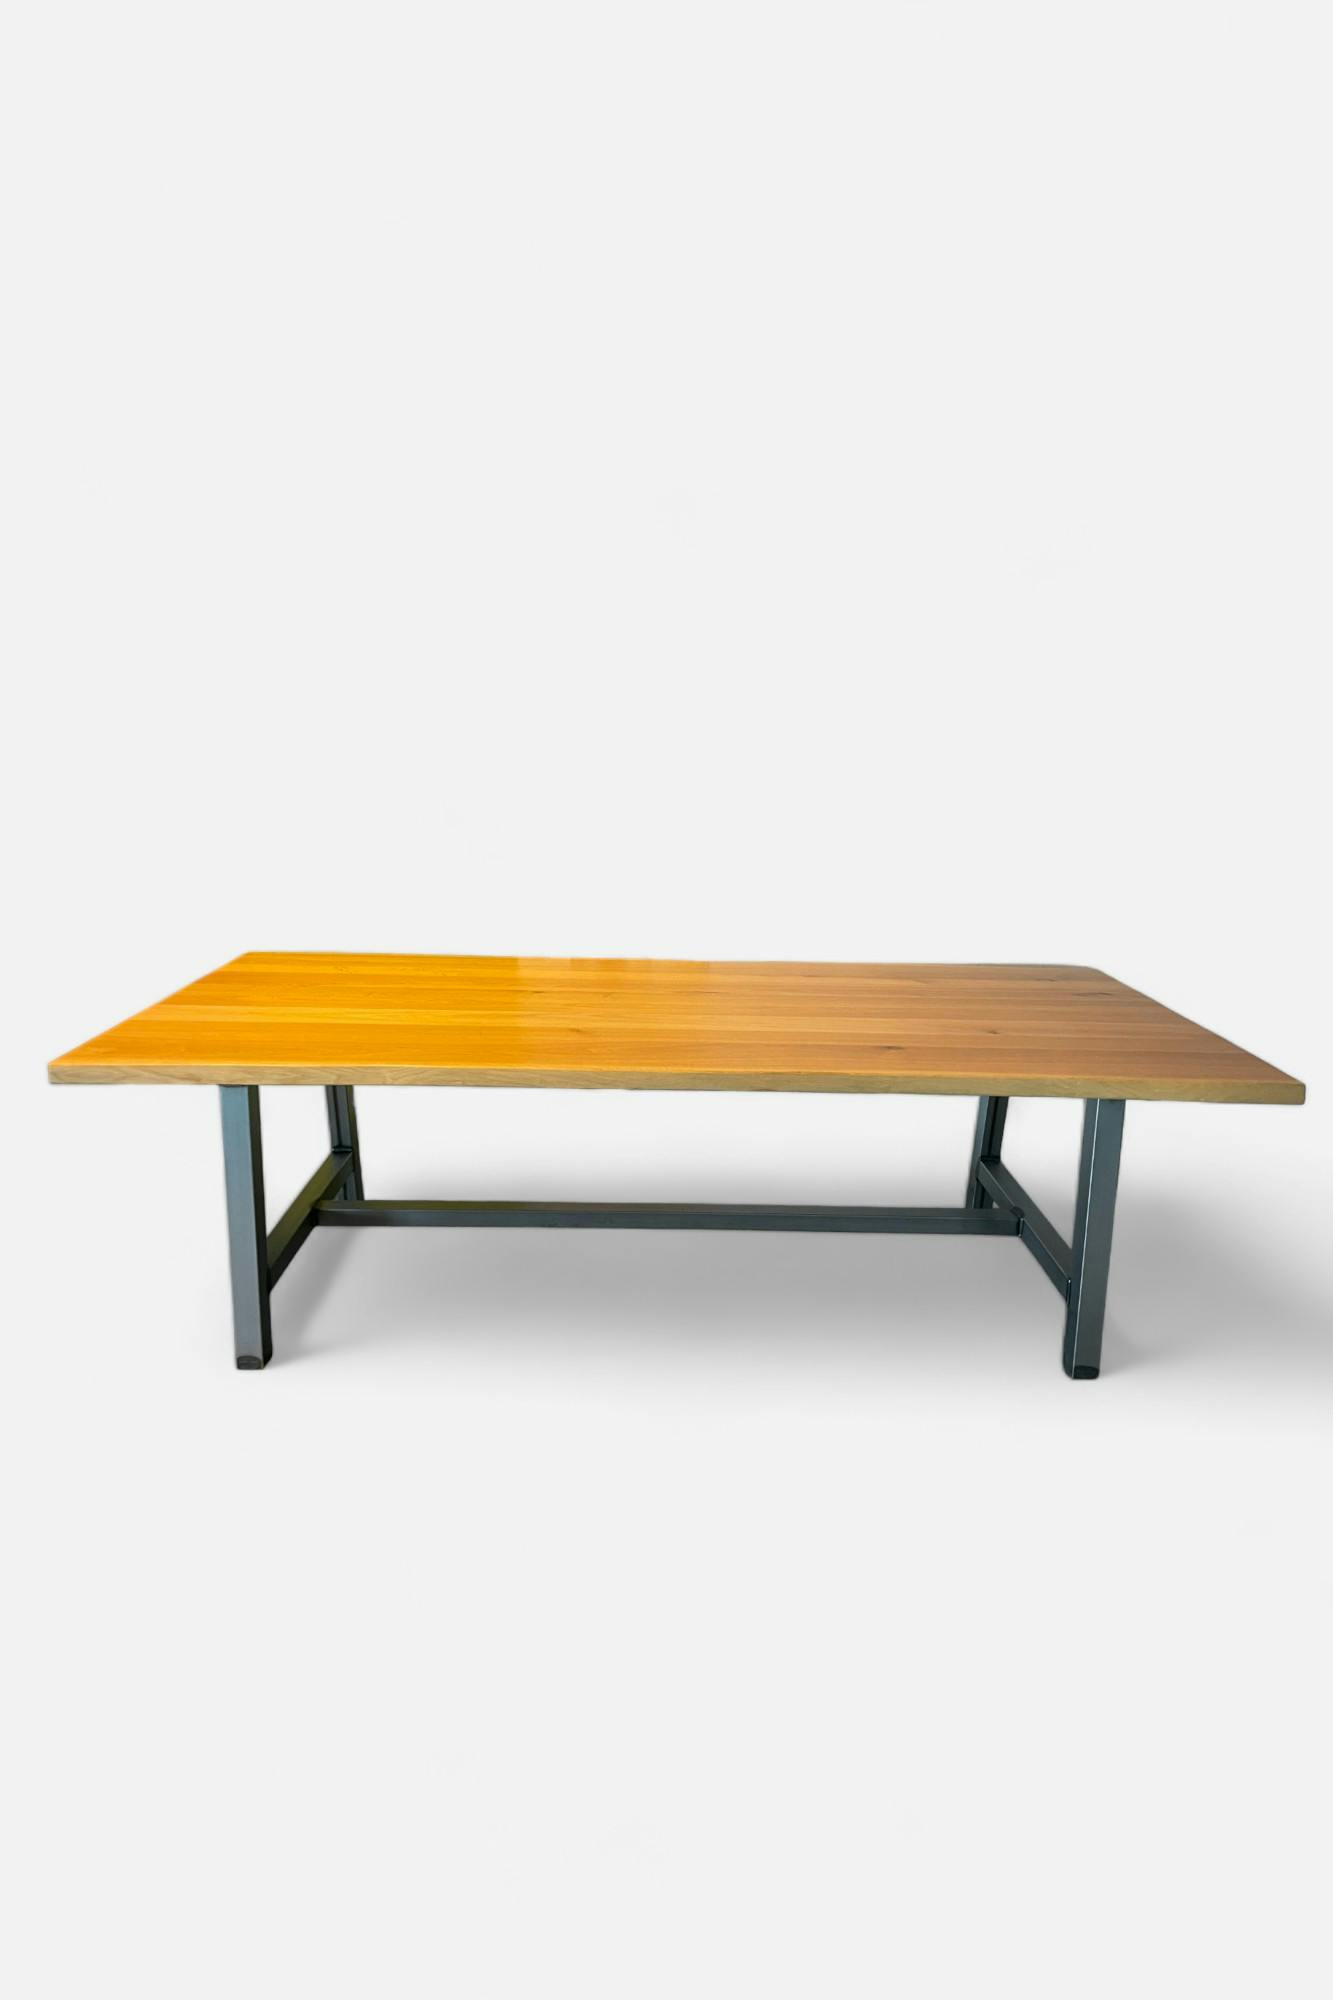 Massive oak wood table - Relieve Furniture